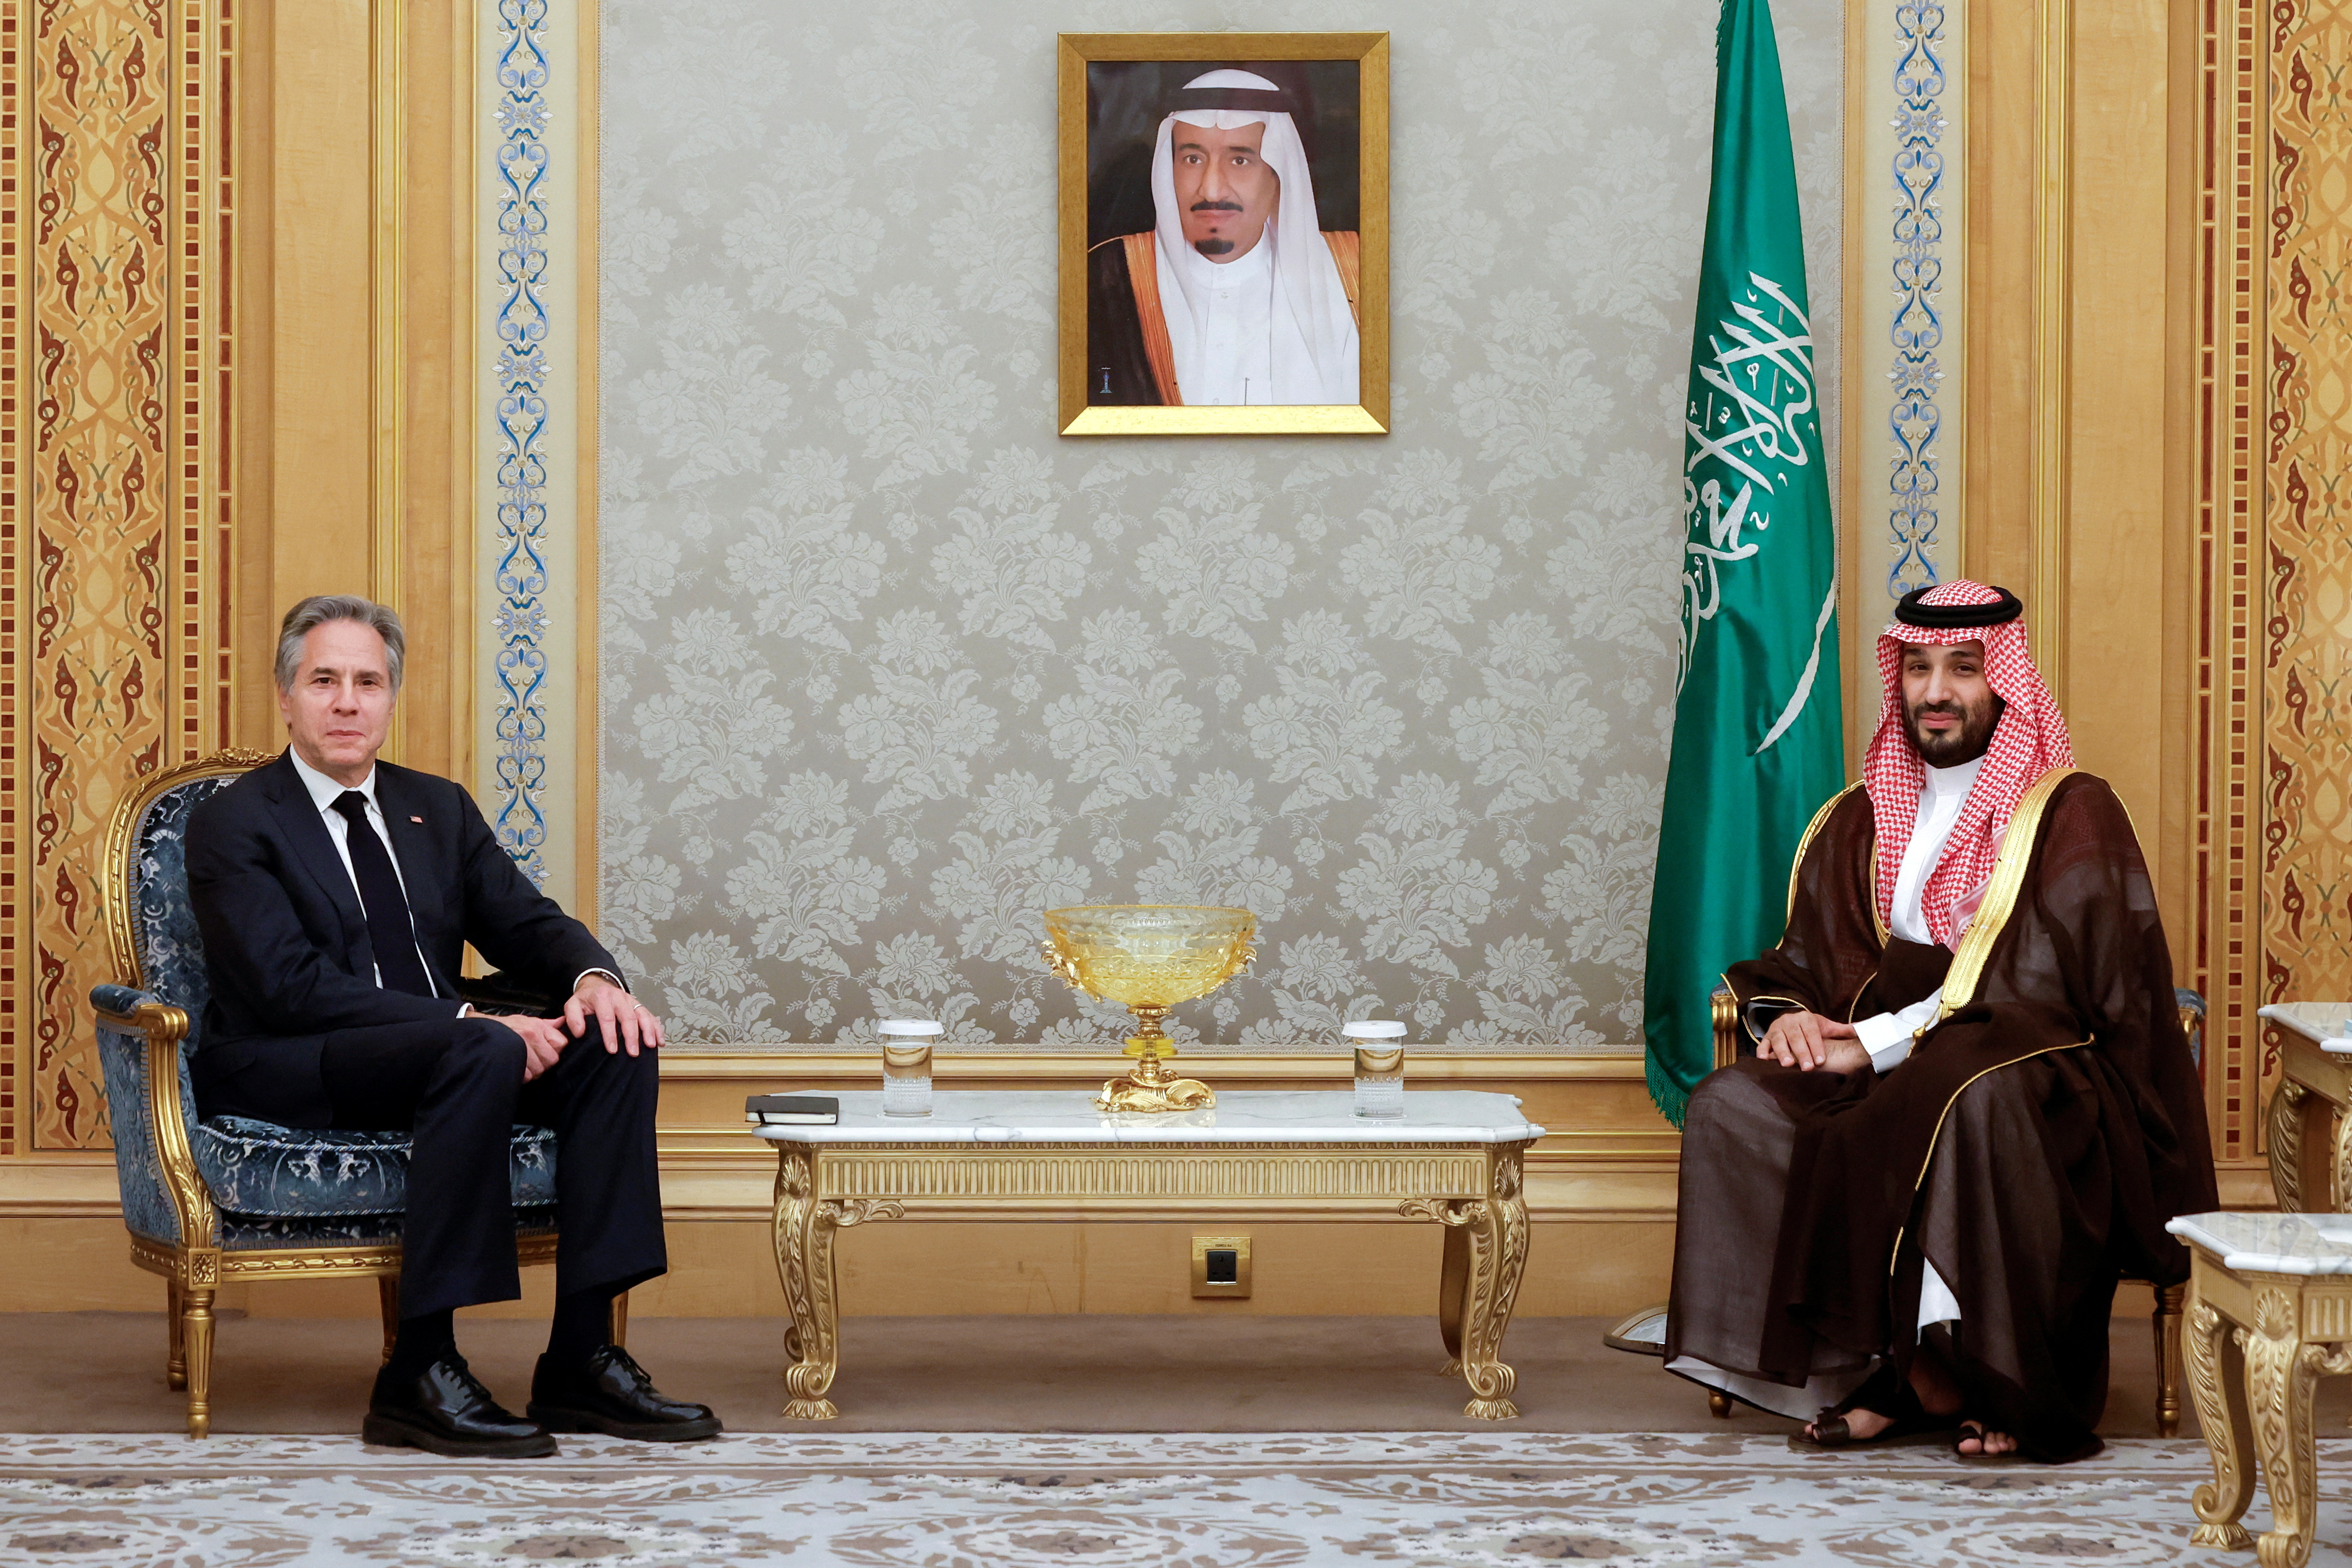 U.S. Secretary of State Blinken meets with Saudi Crown Prince and Prime Minister Mohammed bin Salman in Riyadh